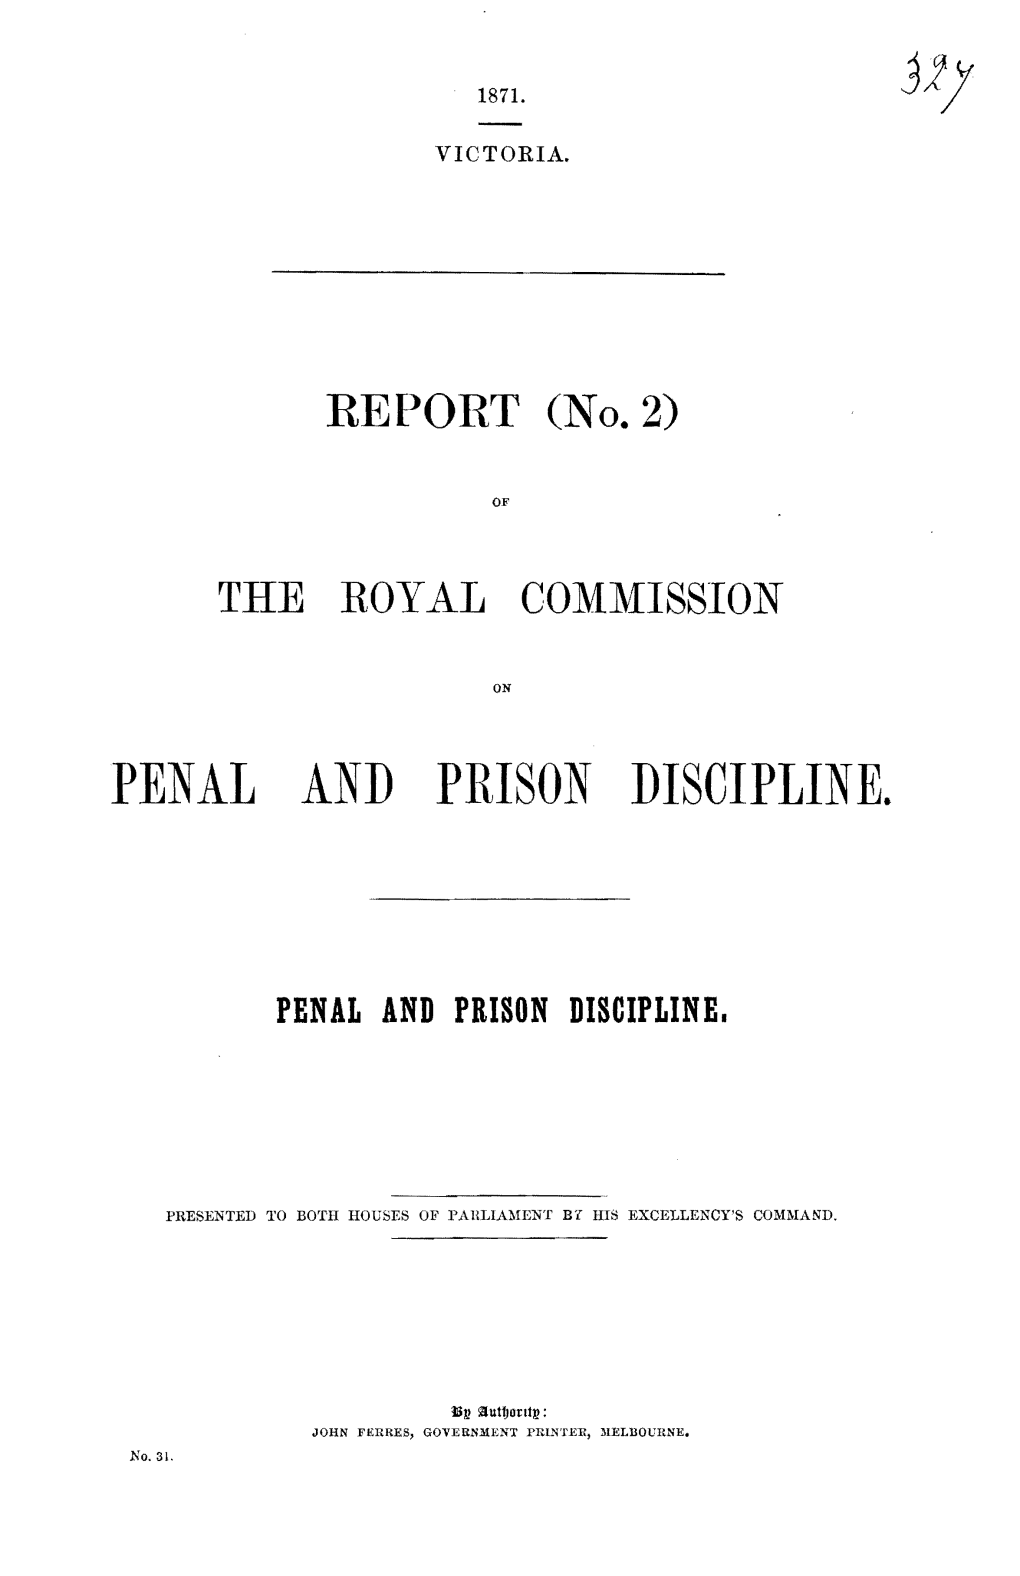 Penal and Prison Discipline